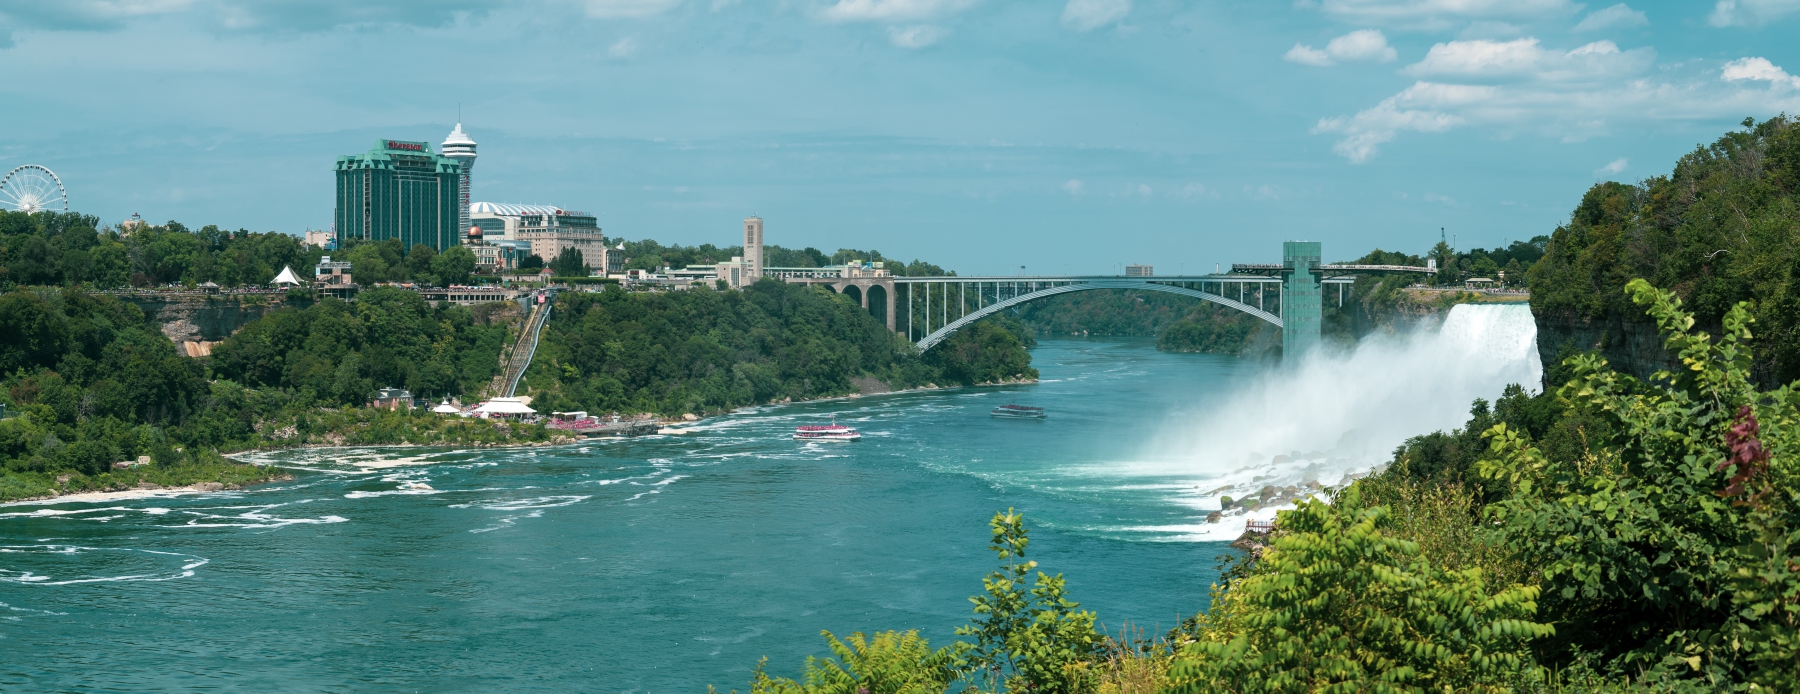 Niagara gorge